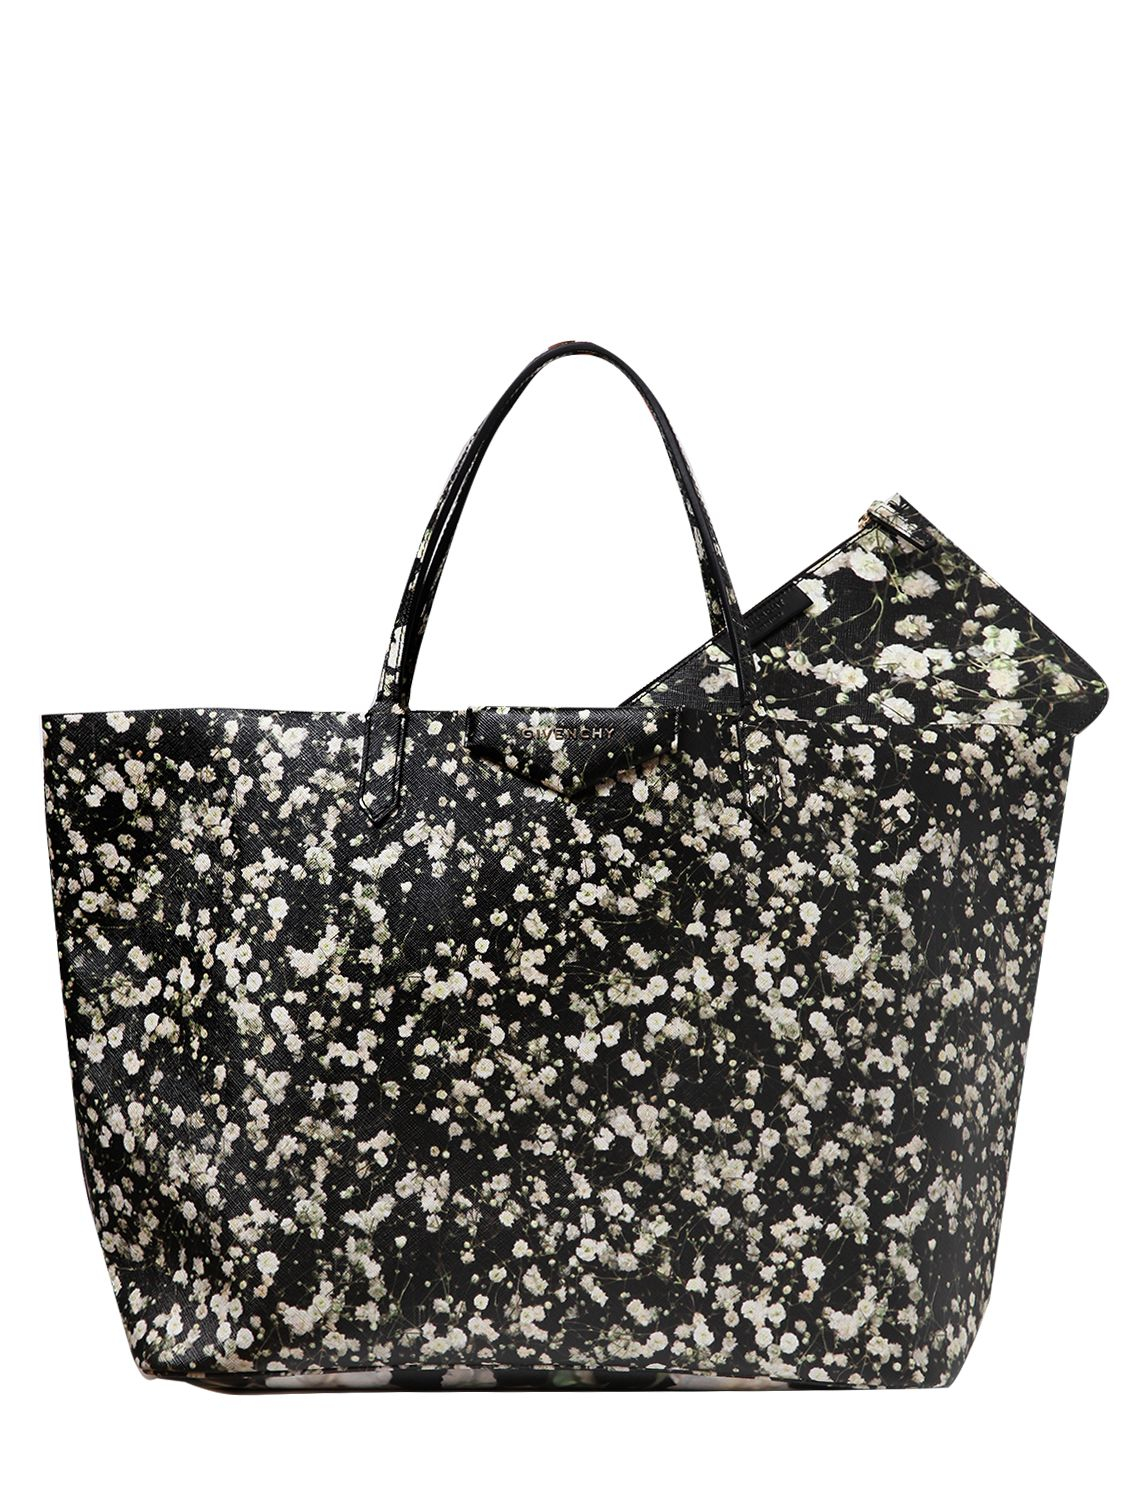 Givenchy Large Antigona Floral Printed Tote Bag in Gray | Lyst